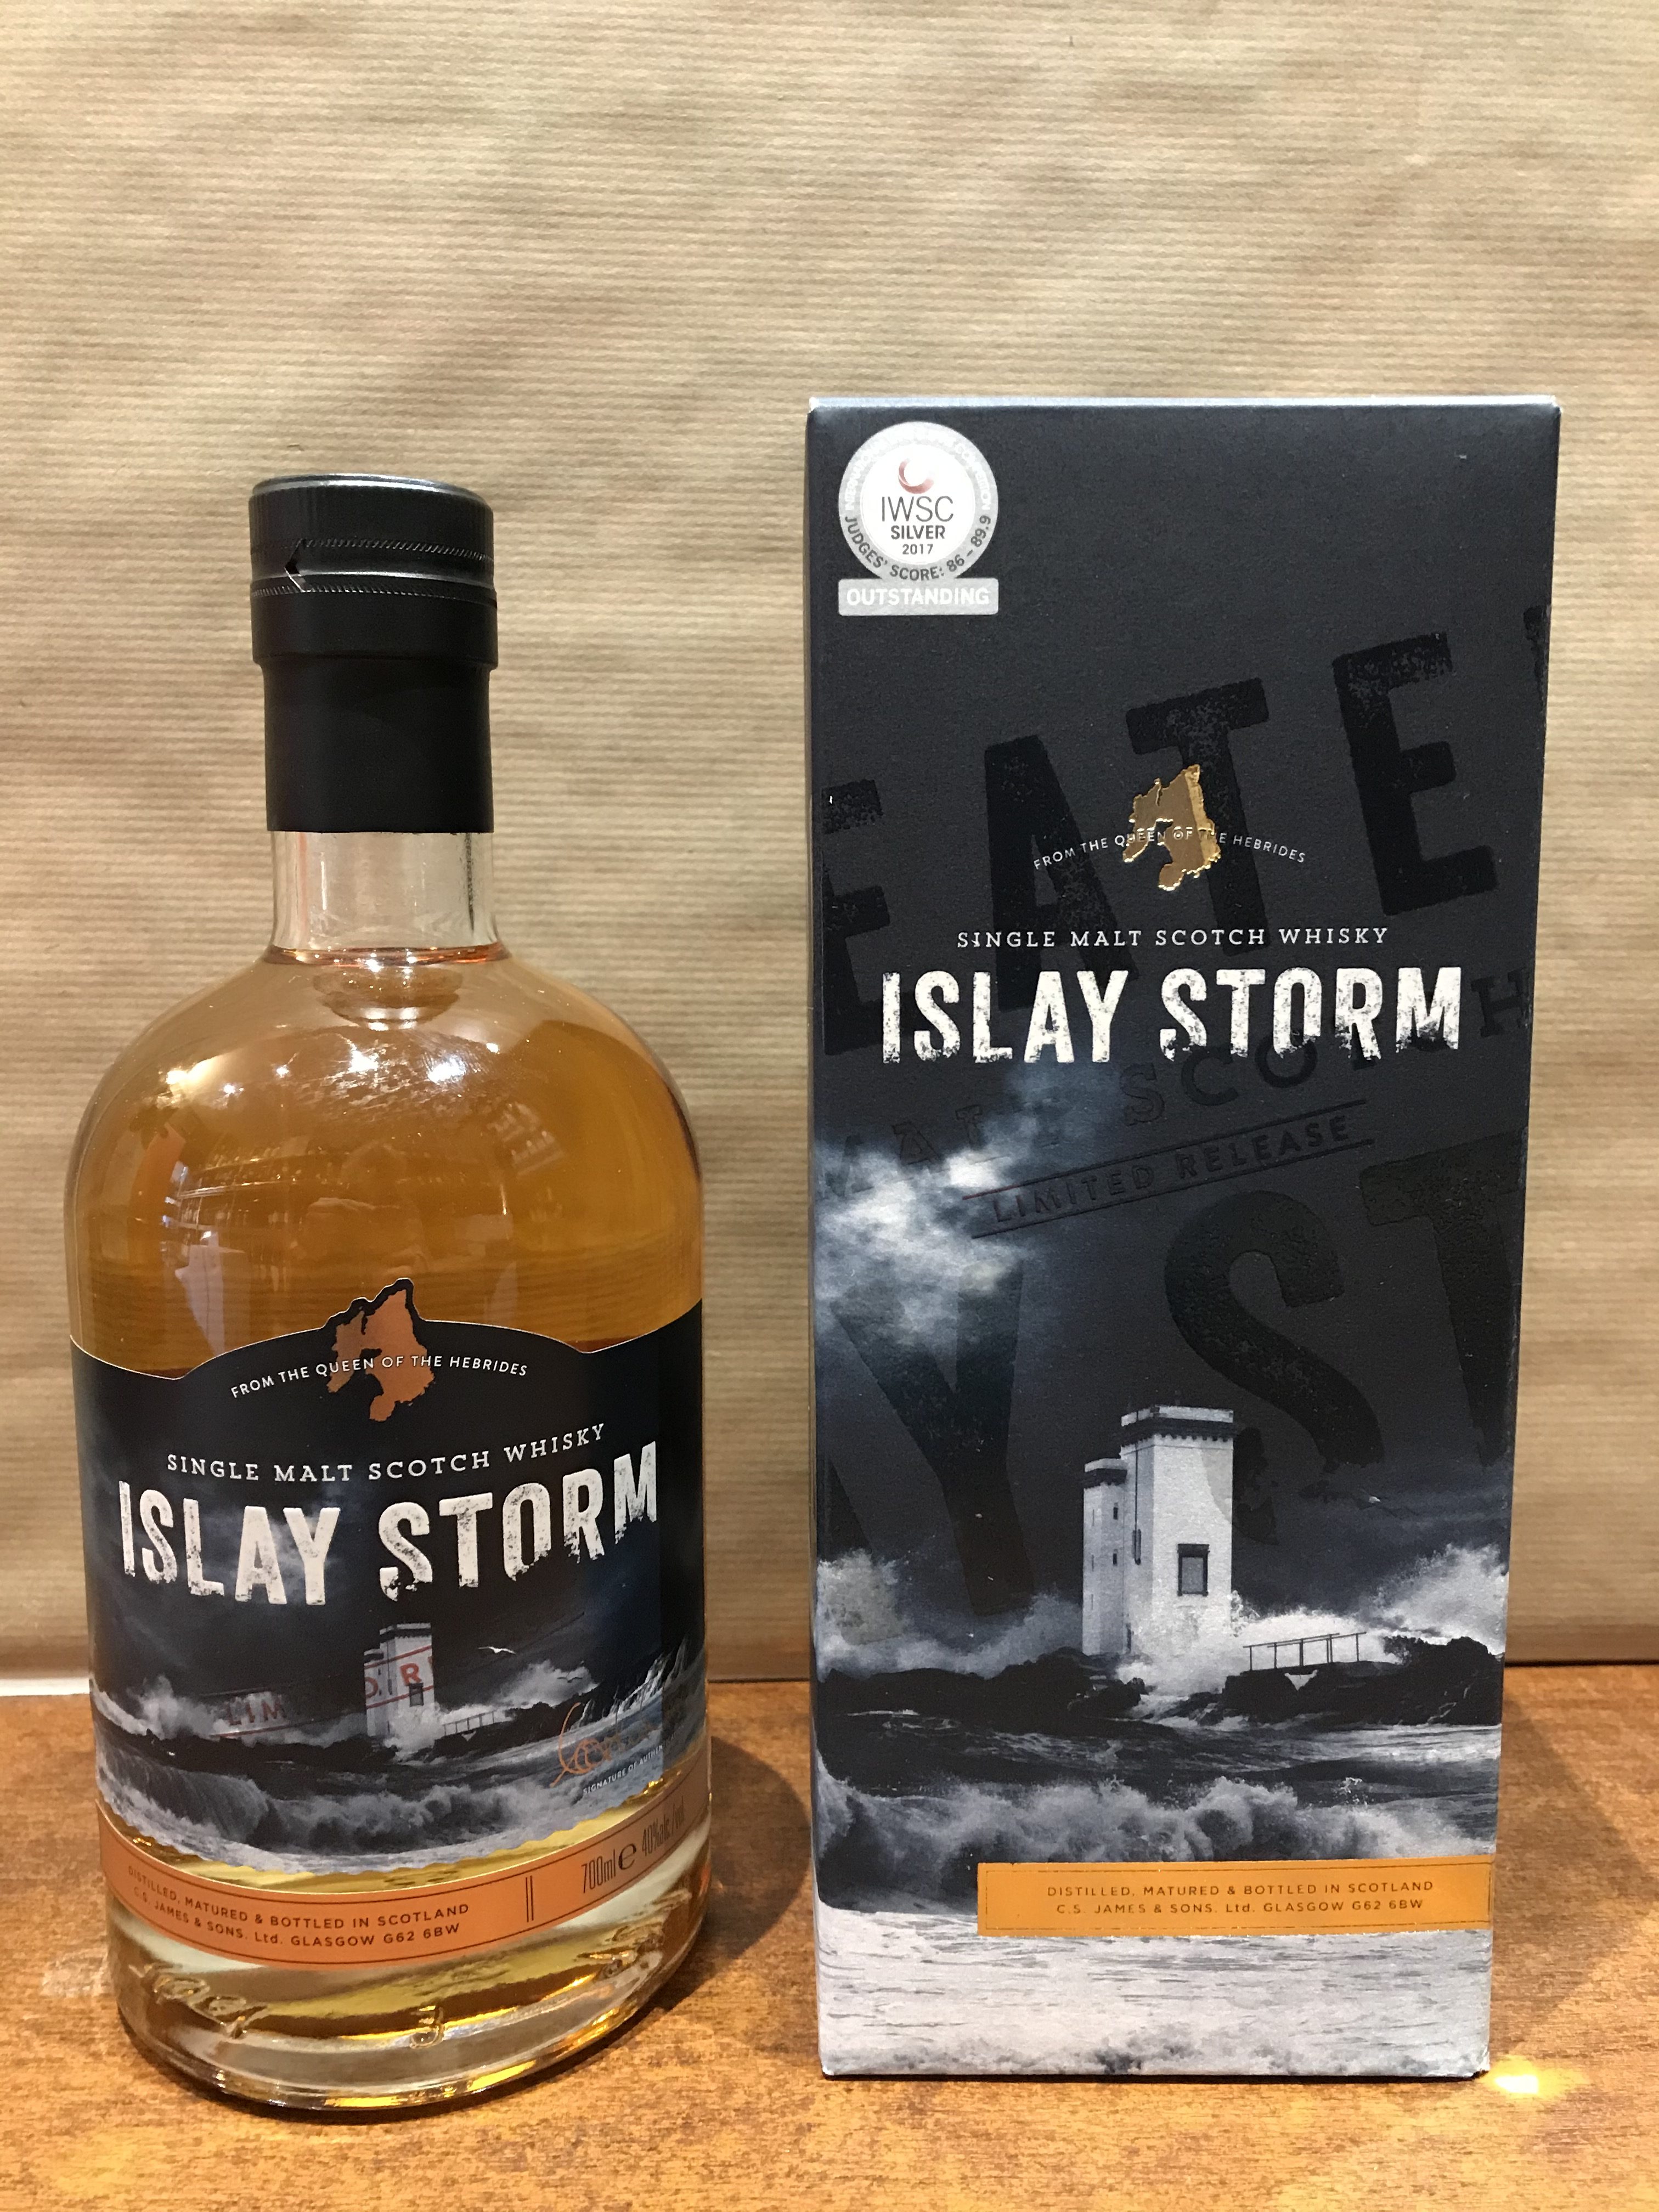 Whisky Islay Storm Single Malt